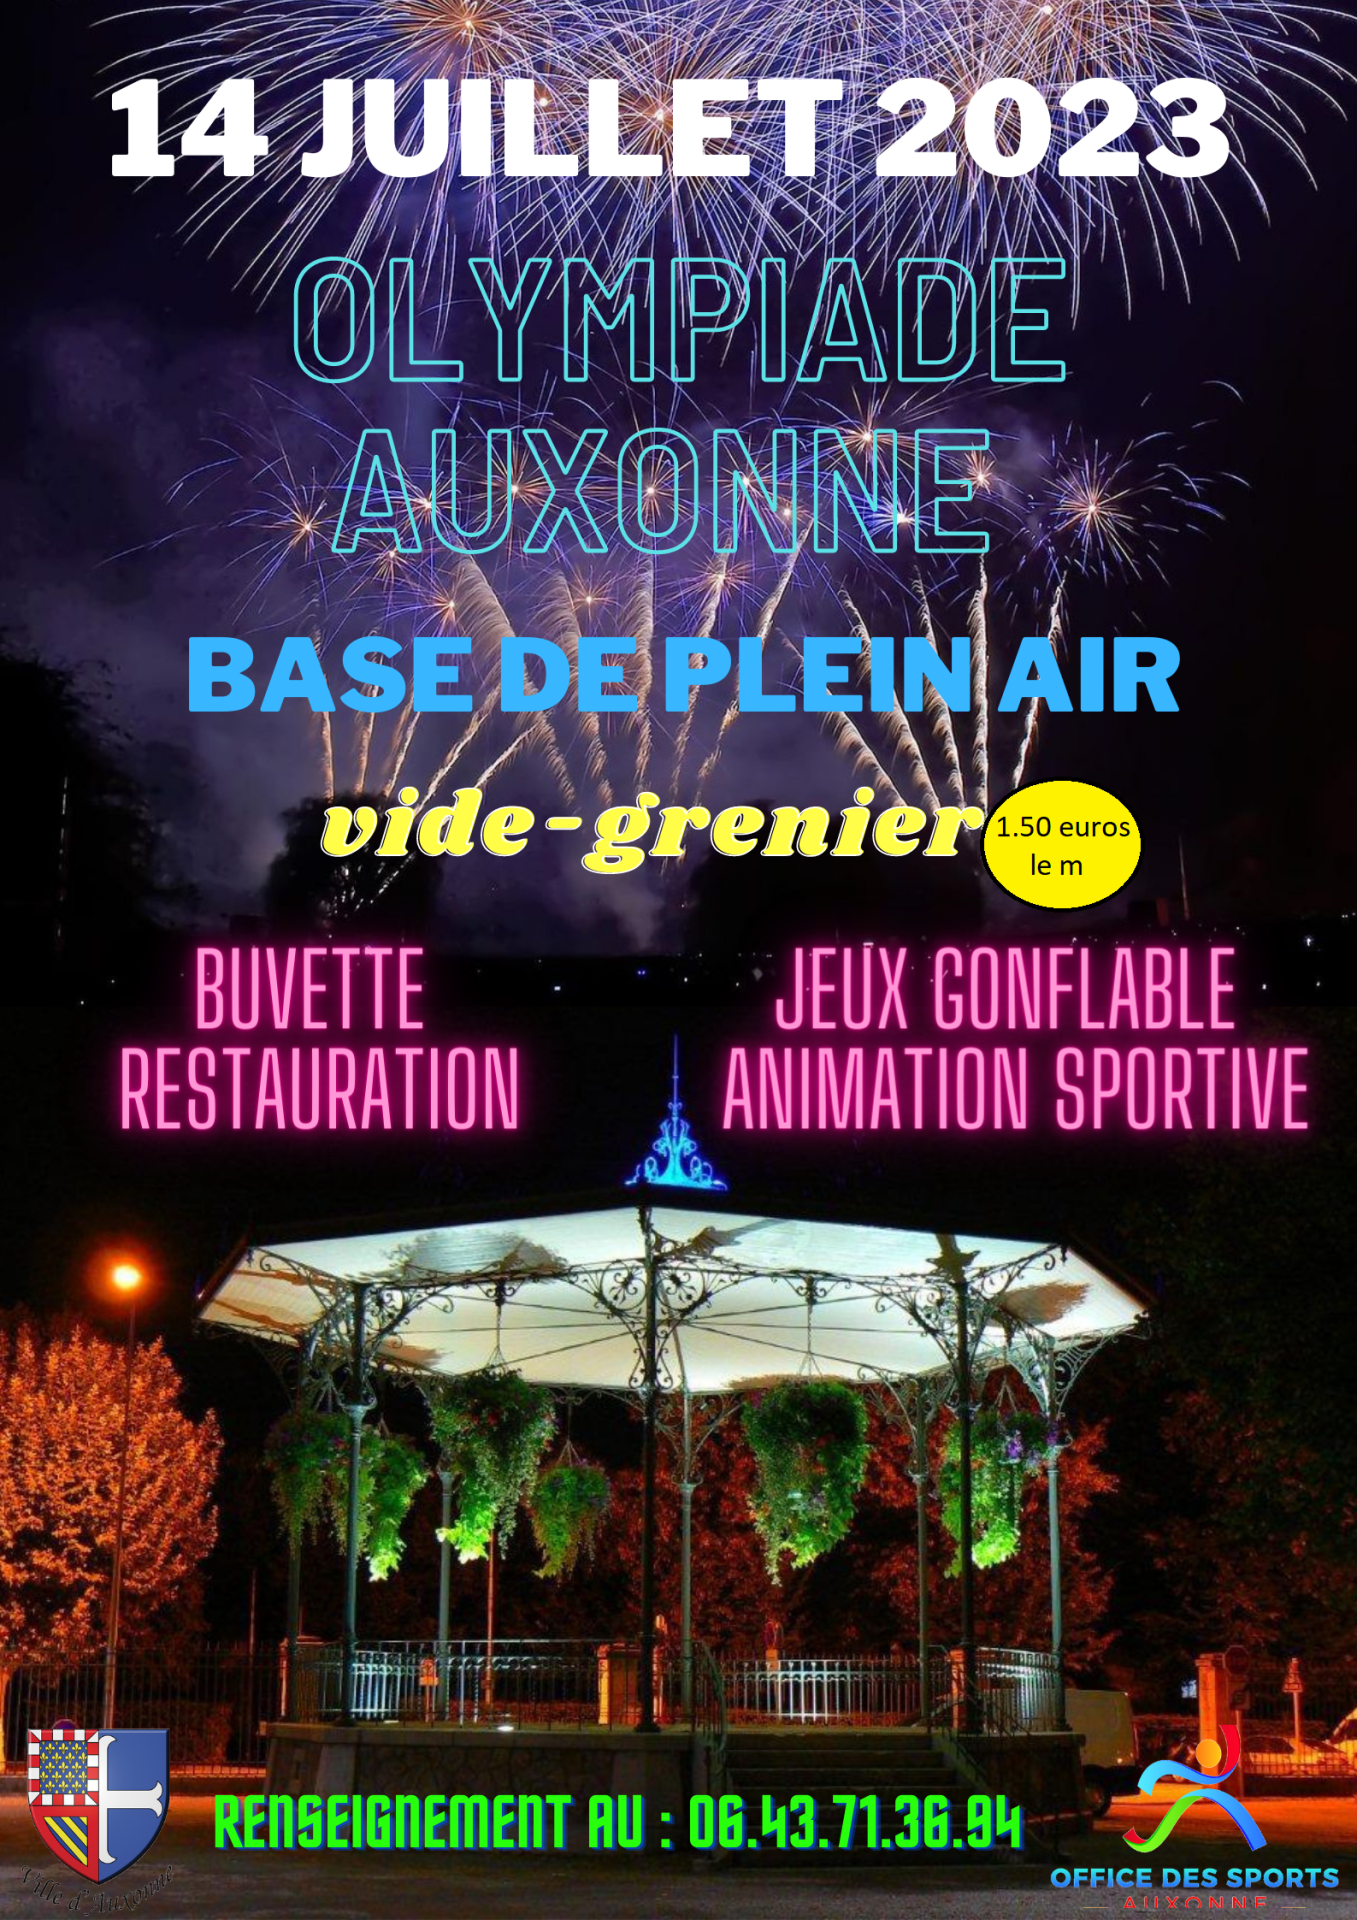 14 juillet : Olympiade Auxonne